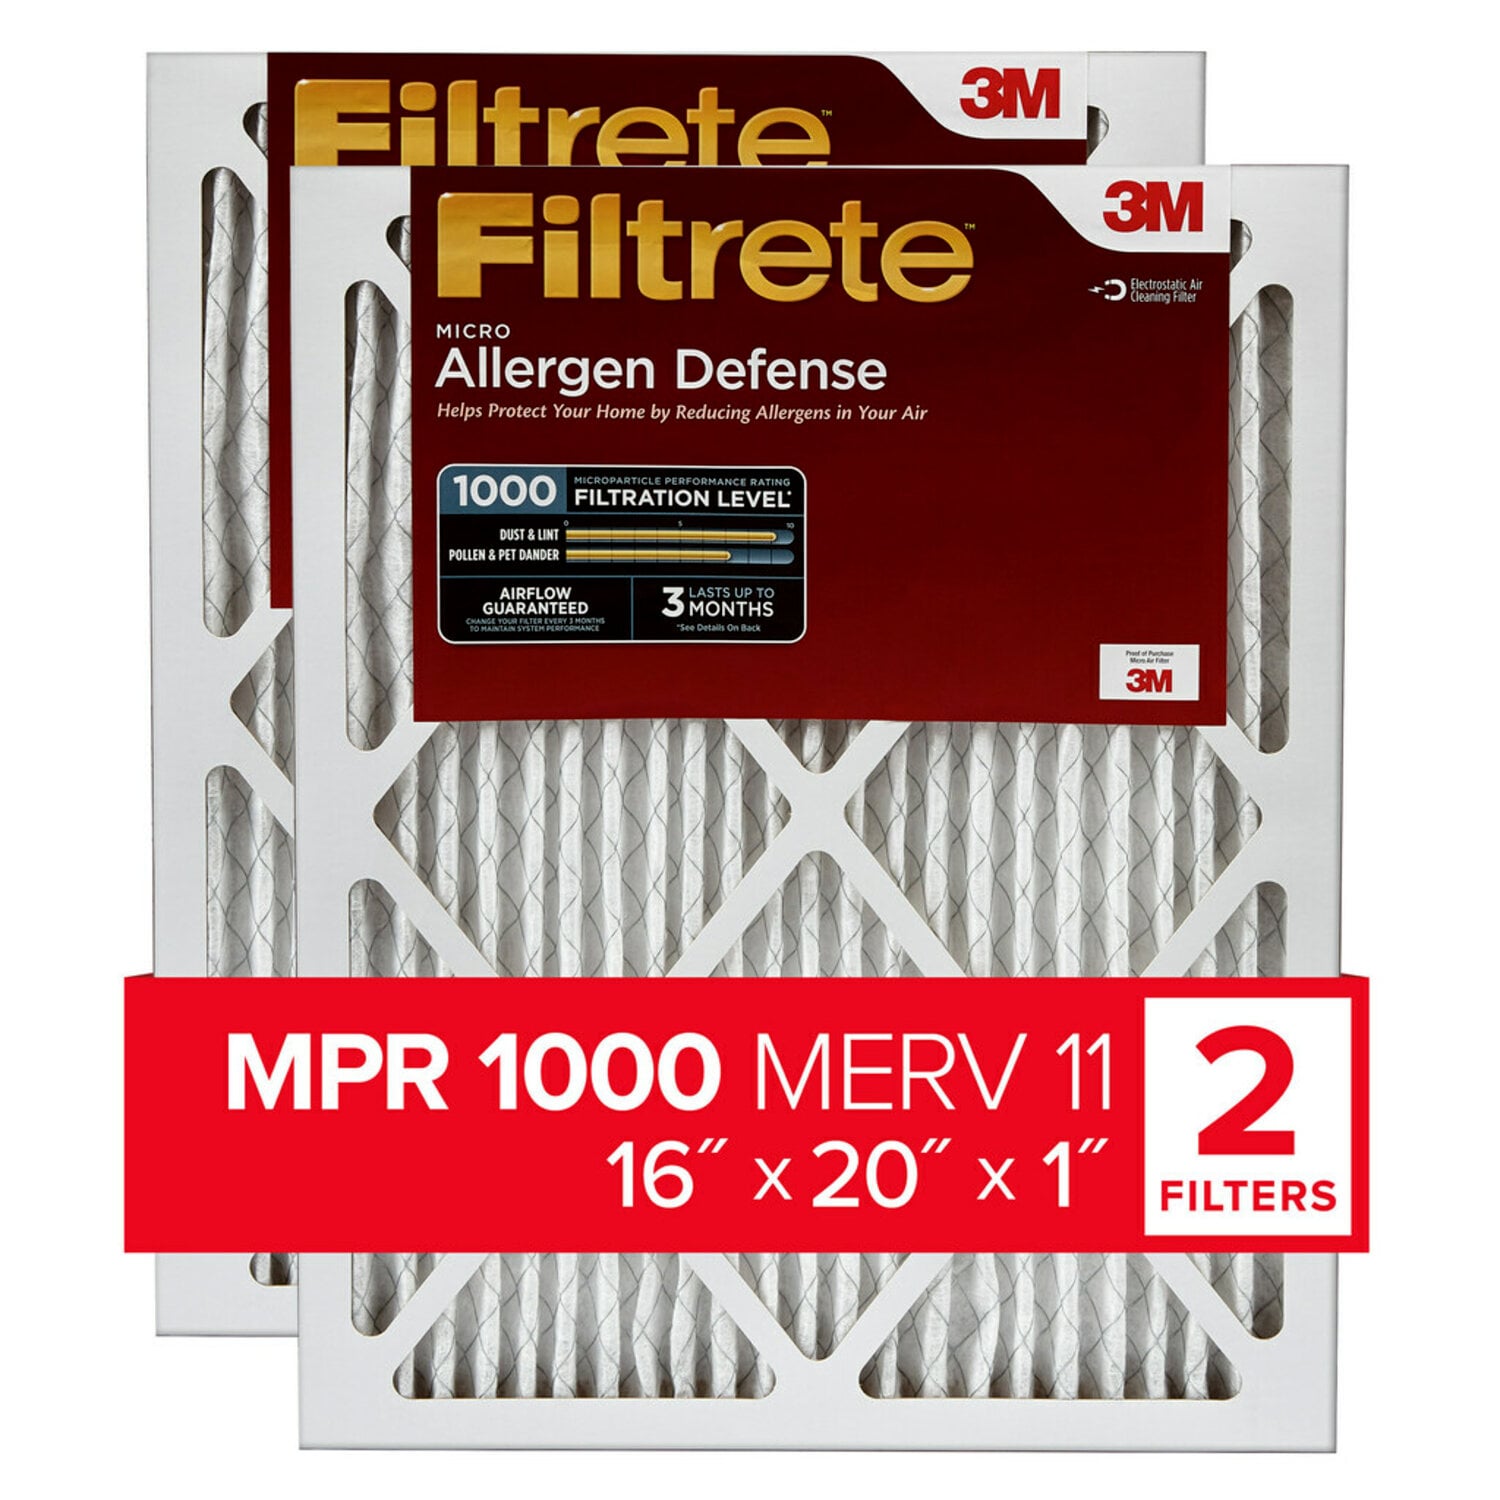 7100212118 - Filtrete Allergen Defense Filter AD00-2PK-1E, 16 in x 20 in x 1 in (40.6 cm x 50.8 cm x 2.5 cm) ,